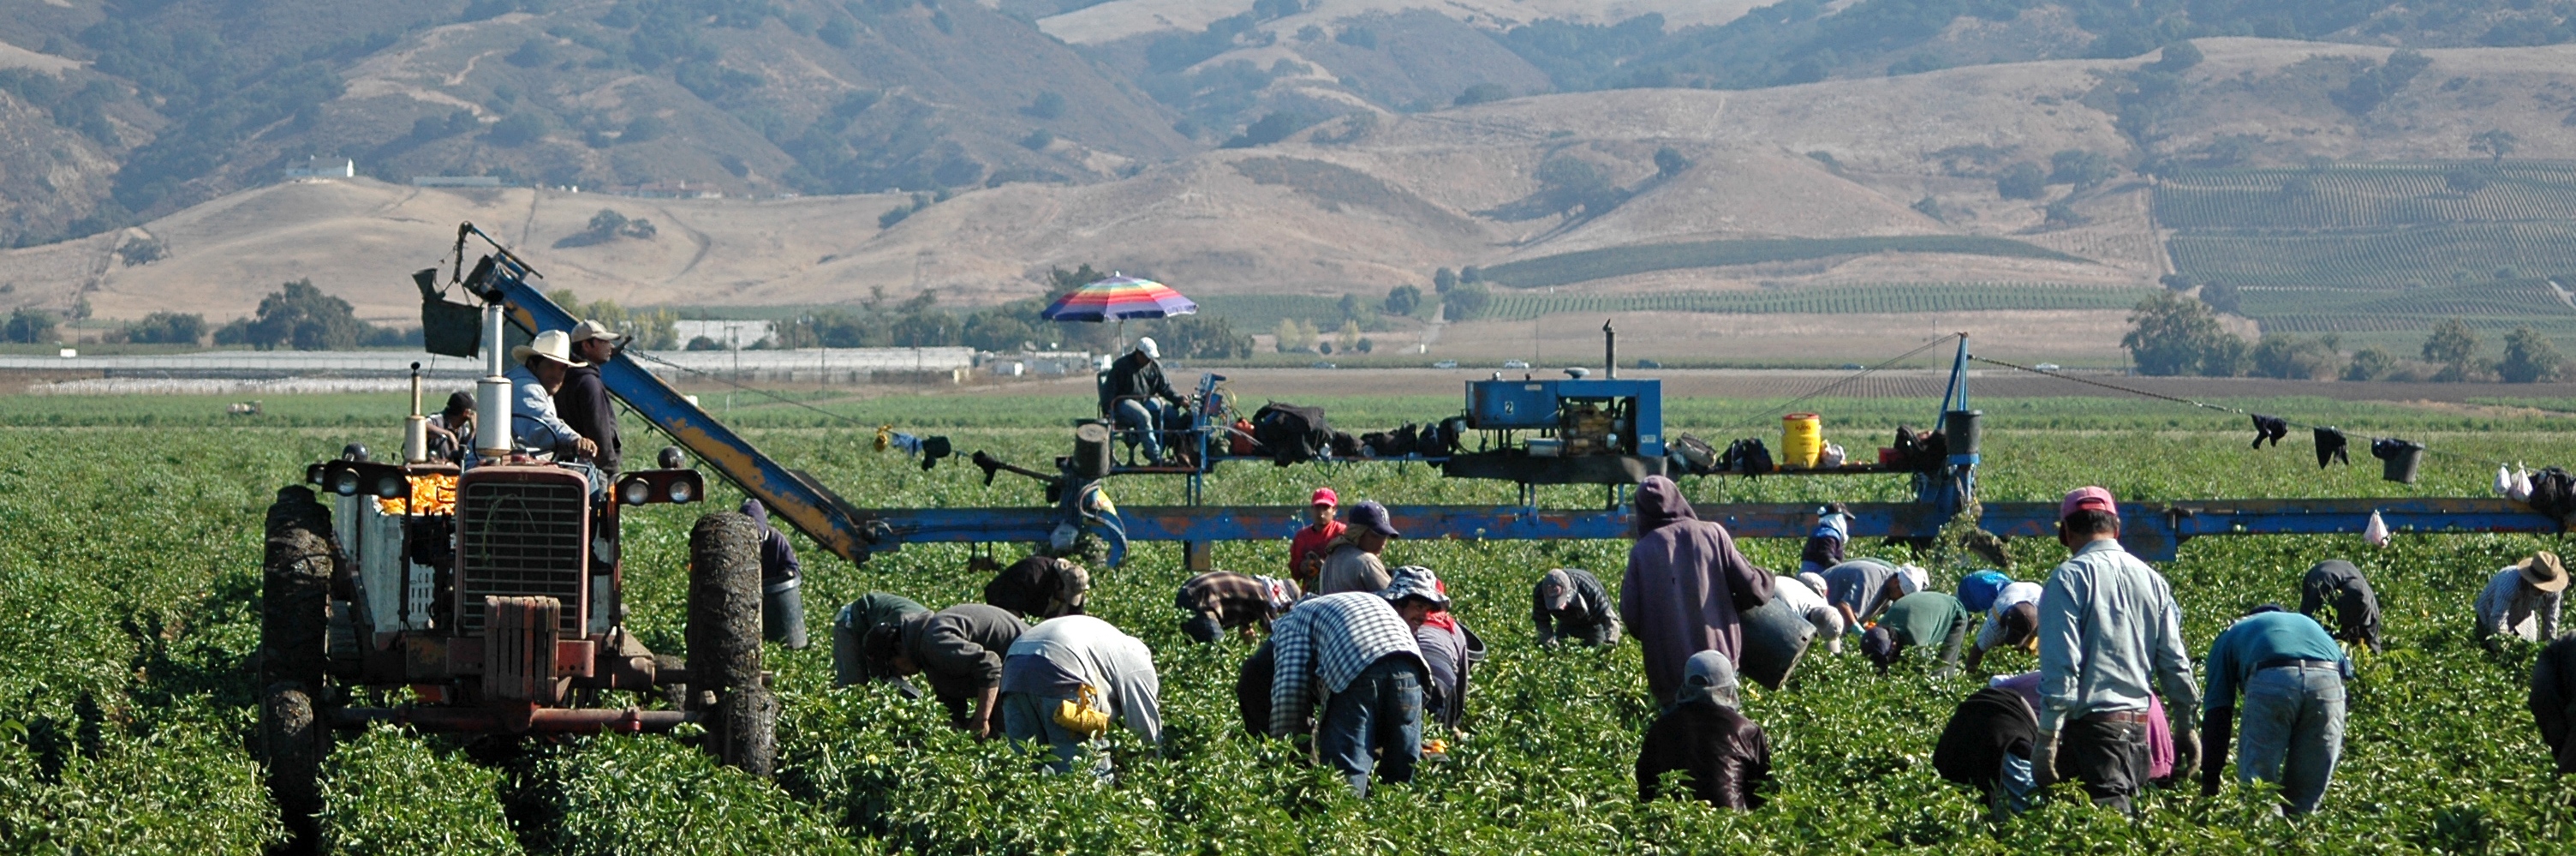 Image of California farm laborers